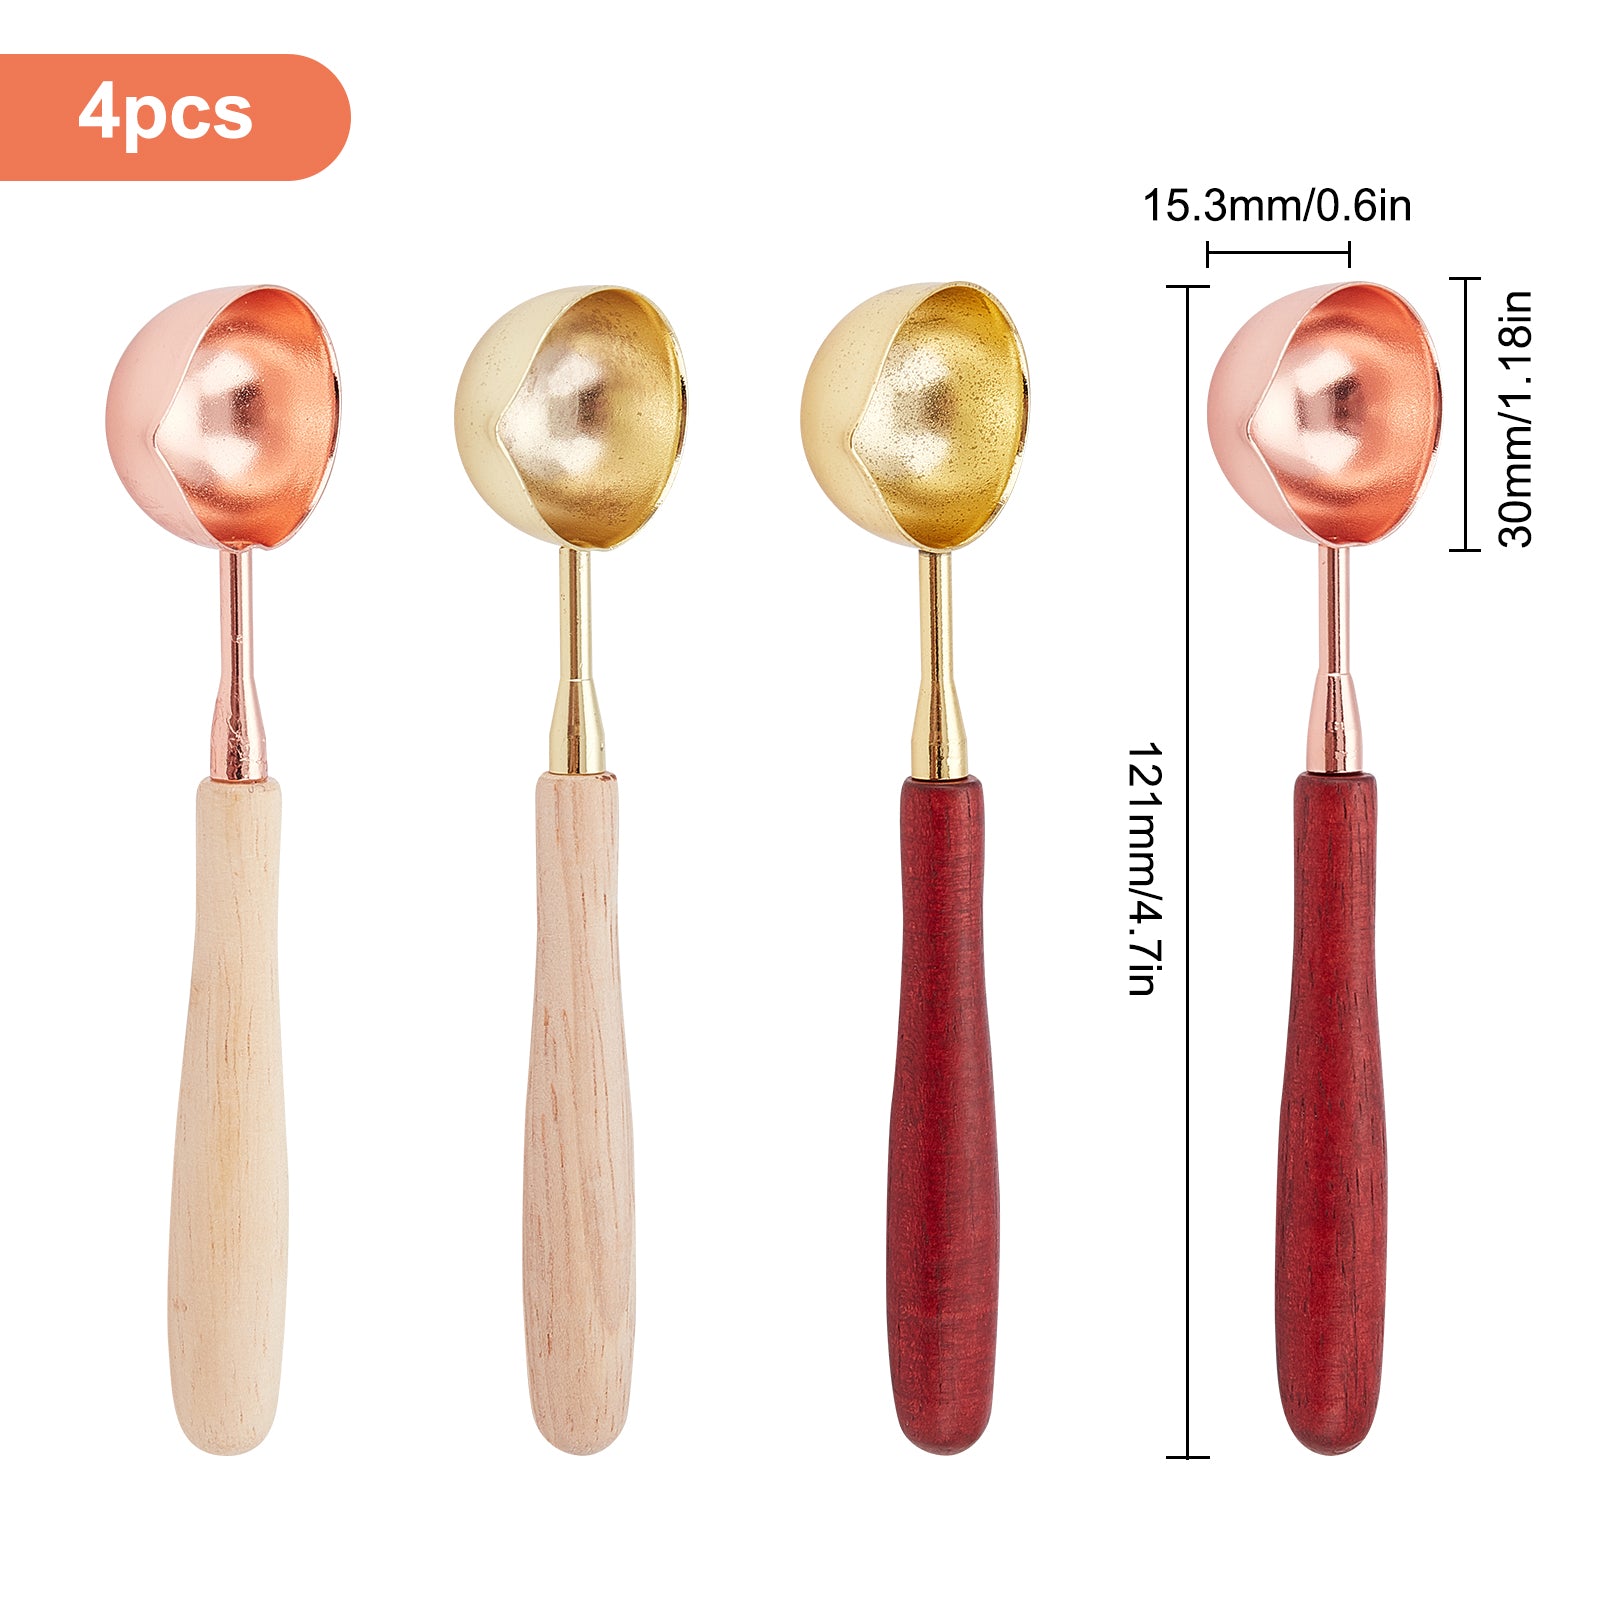 4PCS Wax Melting Spoons – CRASPIRE